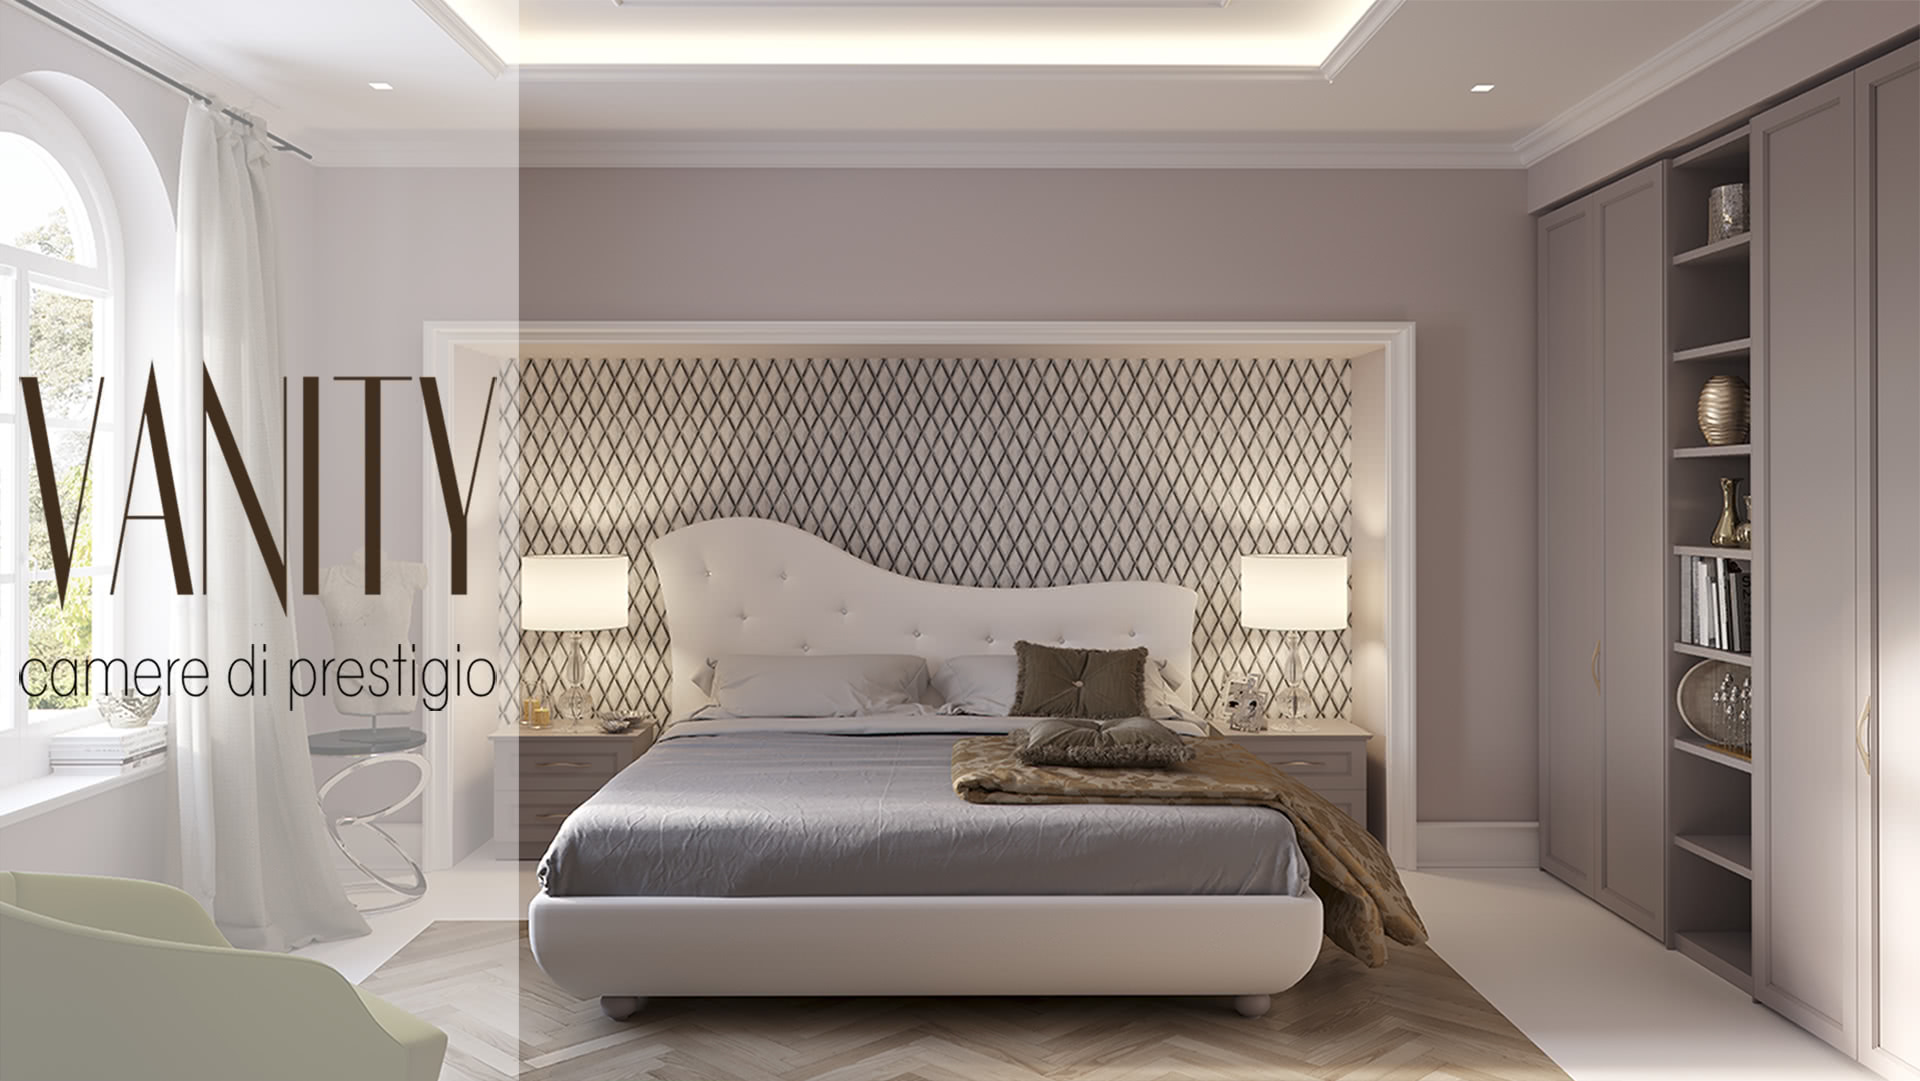 Vanity - prestige bedrooms - Giessegi.it